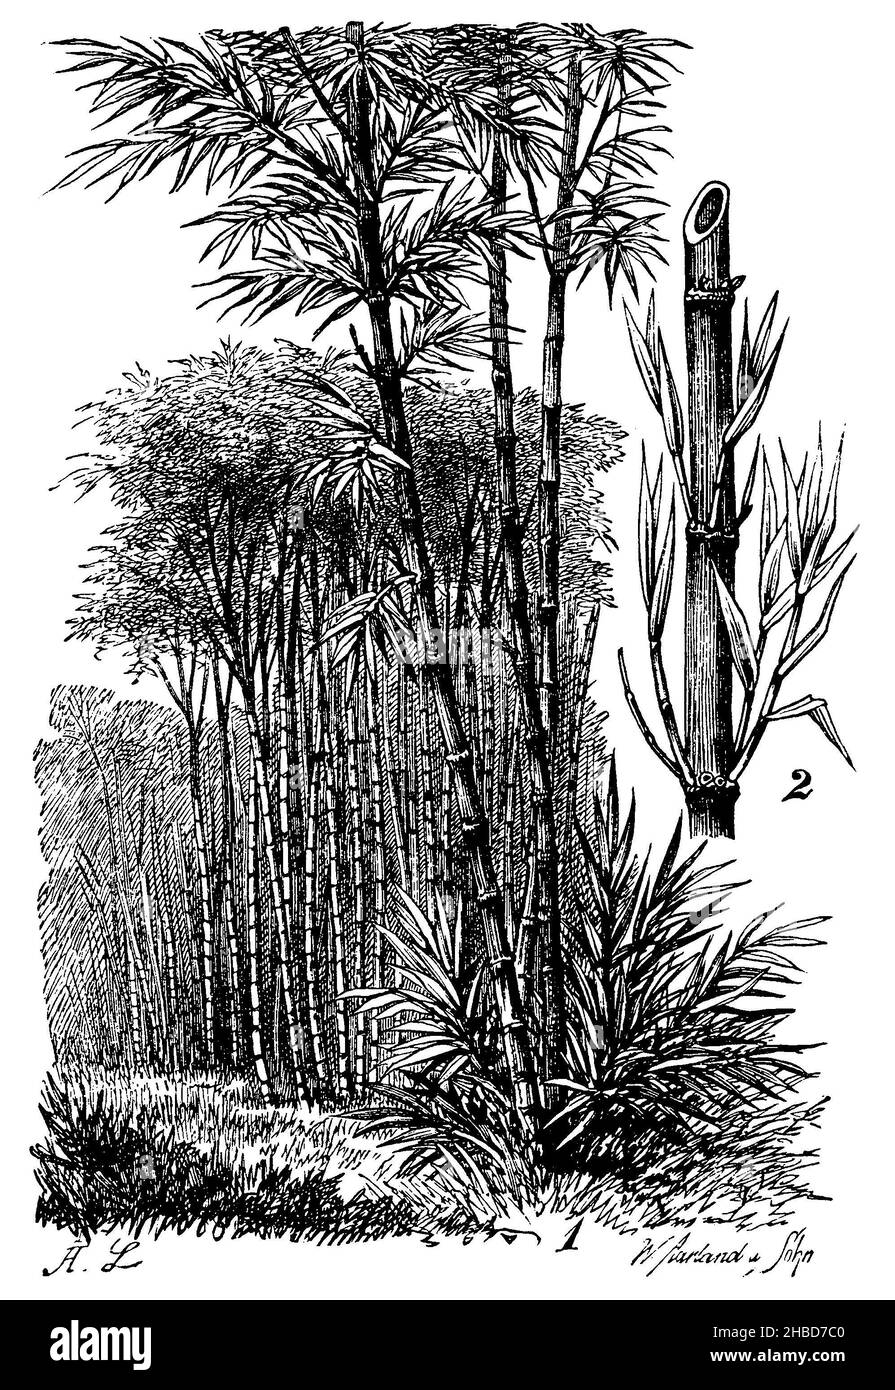 Indian bamboo, , A. L[ütke] u. W. Aarland u. Sohn (botany book, 1889), Indisches Bambusrohr, Canne de bambou indienne Stock Photo